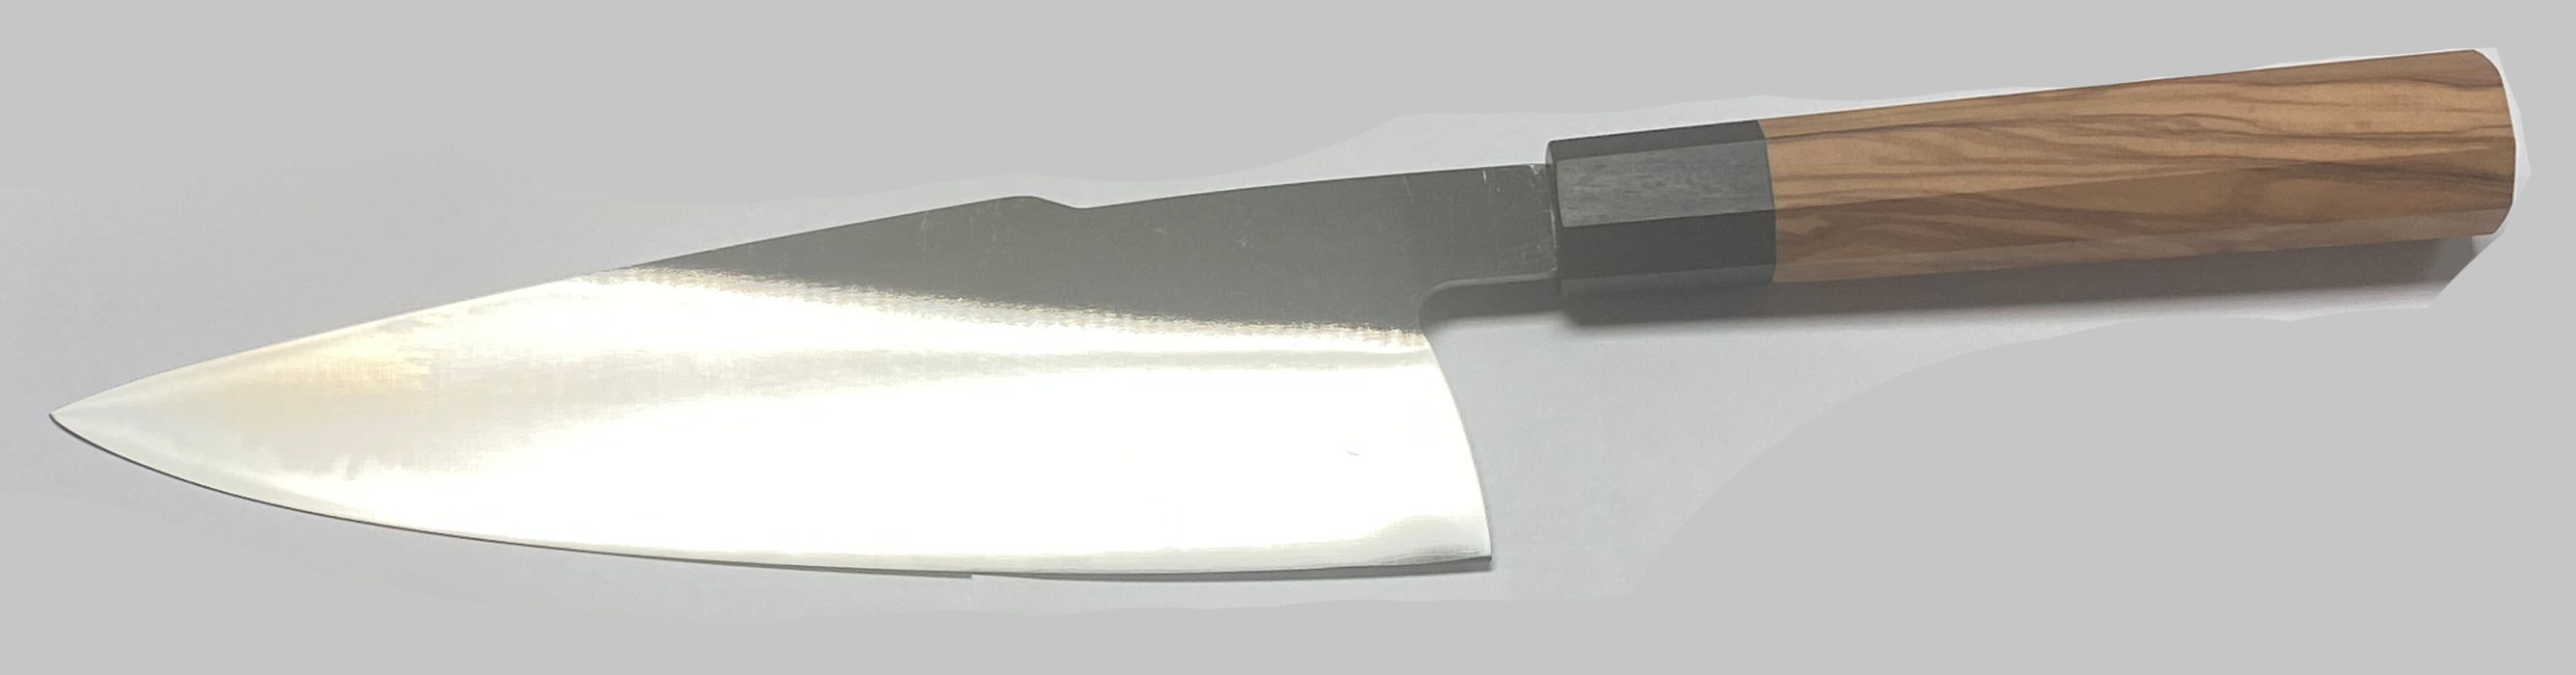 WokMaster Japanese Style Chef Knife - African Blackwood & Olivewood Octagonal Handle - 440C S.S. - Completed Knife